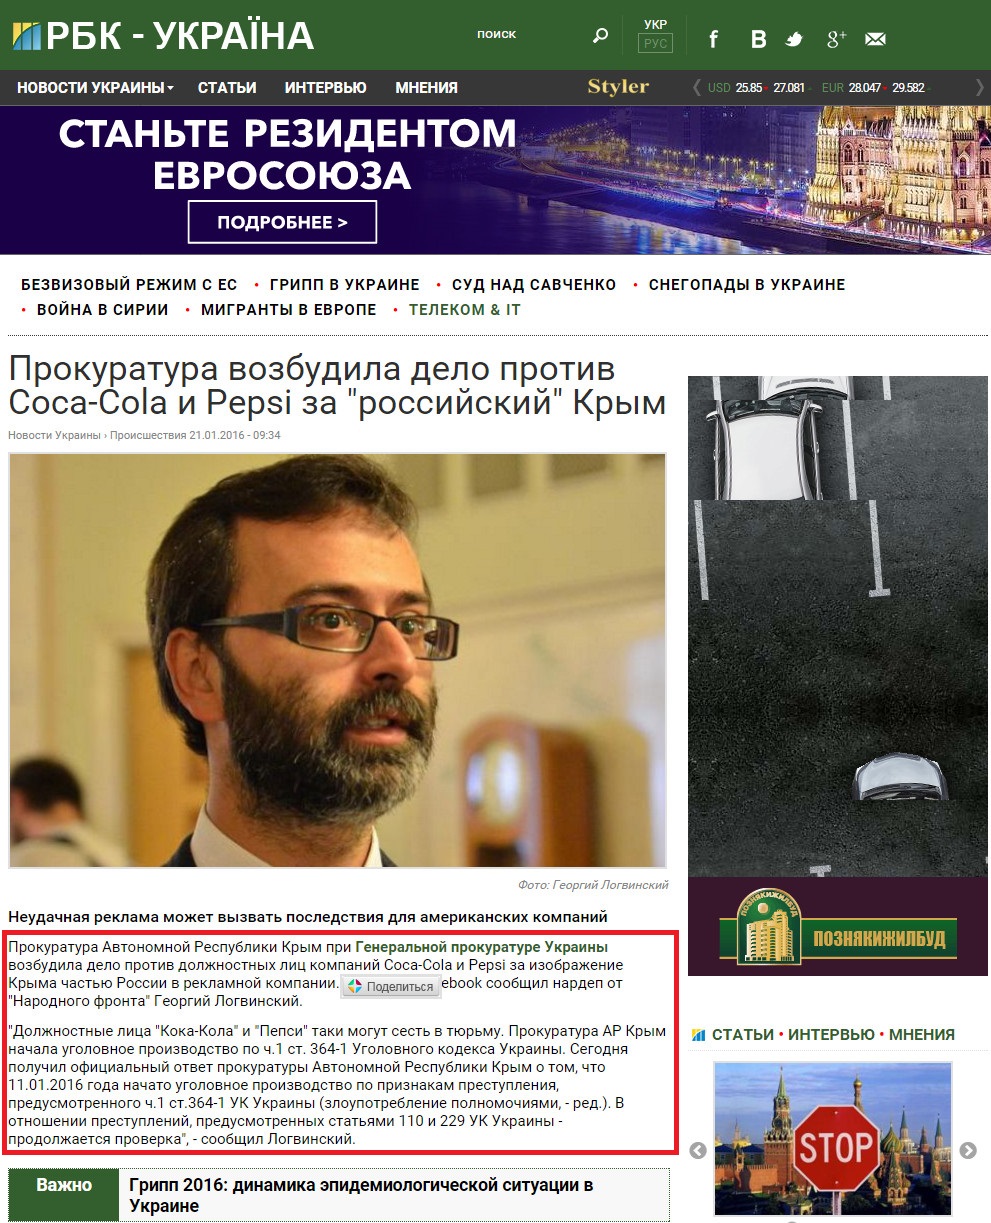 http://www.rbc.ua/rus/news/prokuratura-vozbudila-delo-protiv-coca-cola-1453361596.html